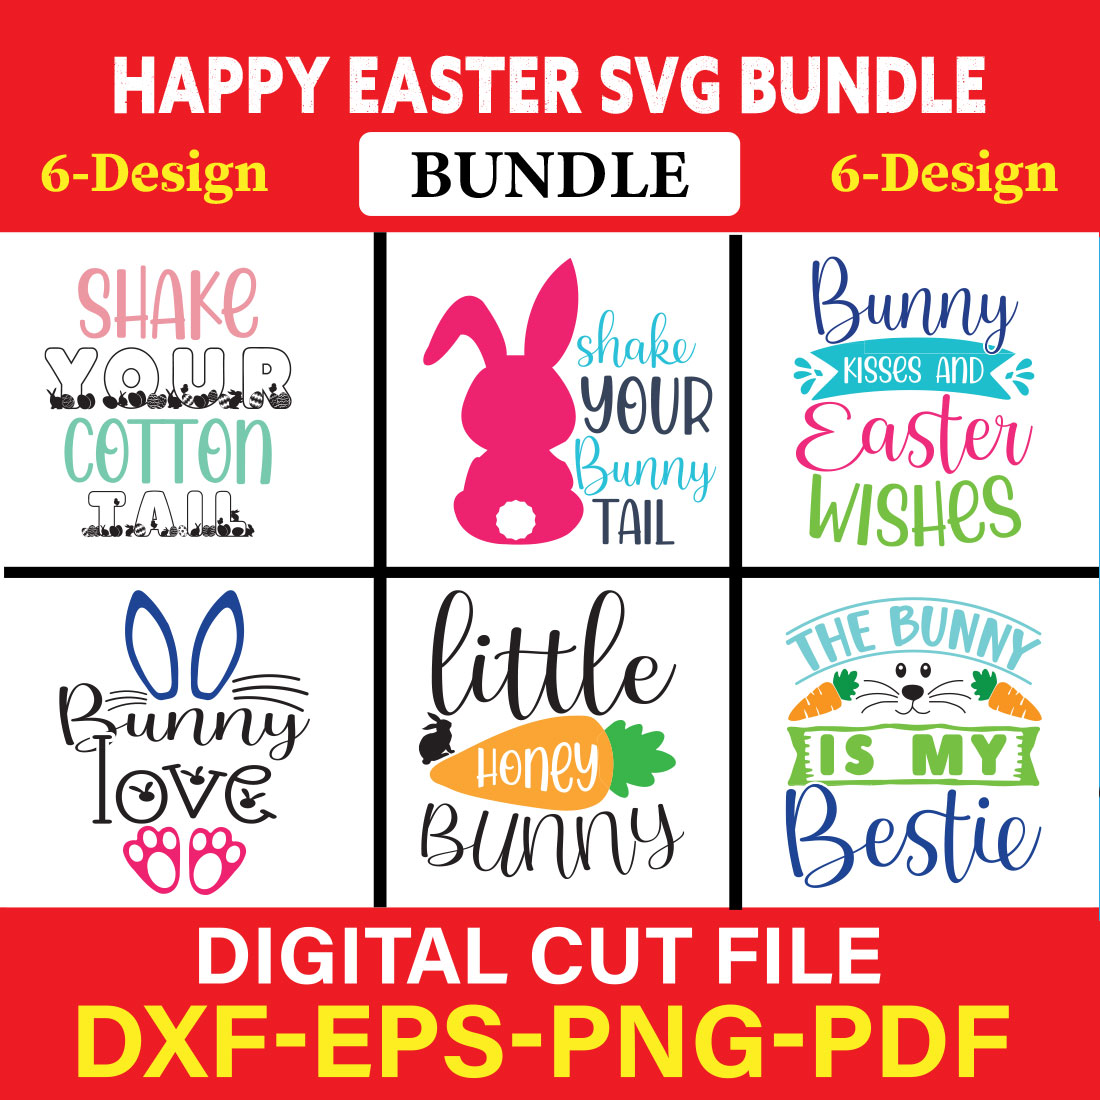 Happy Easter T-shirt Design Bundle Vol-2 cover image.